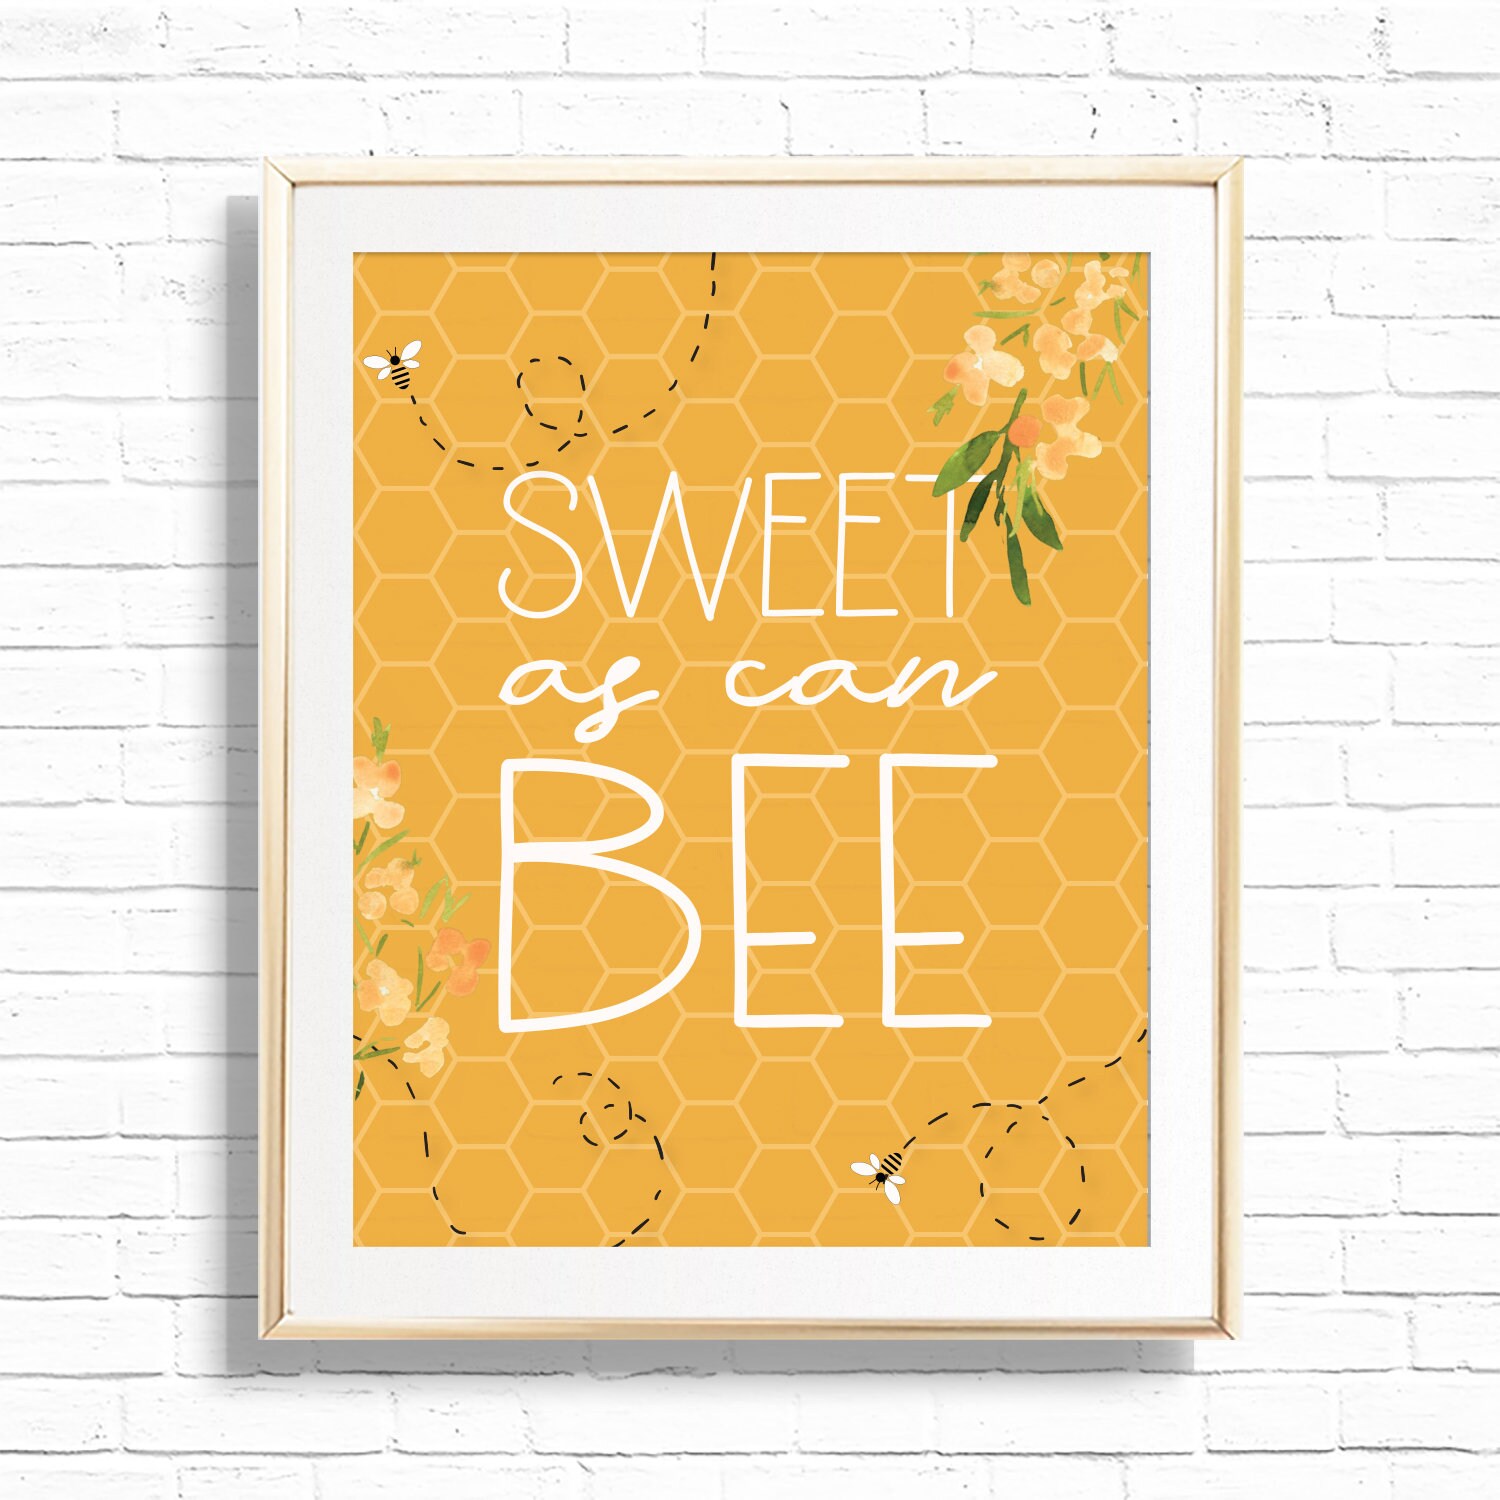 Honey Bee Fresh Honey Custom Poster, Bee Gift, Bee Decor - Wander Prints™